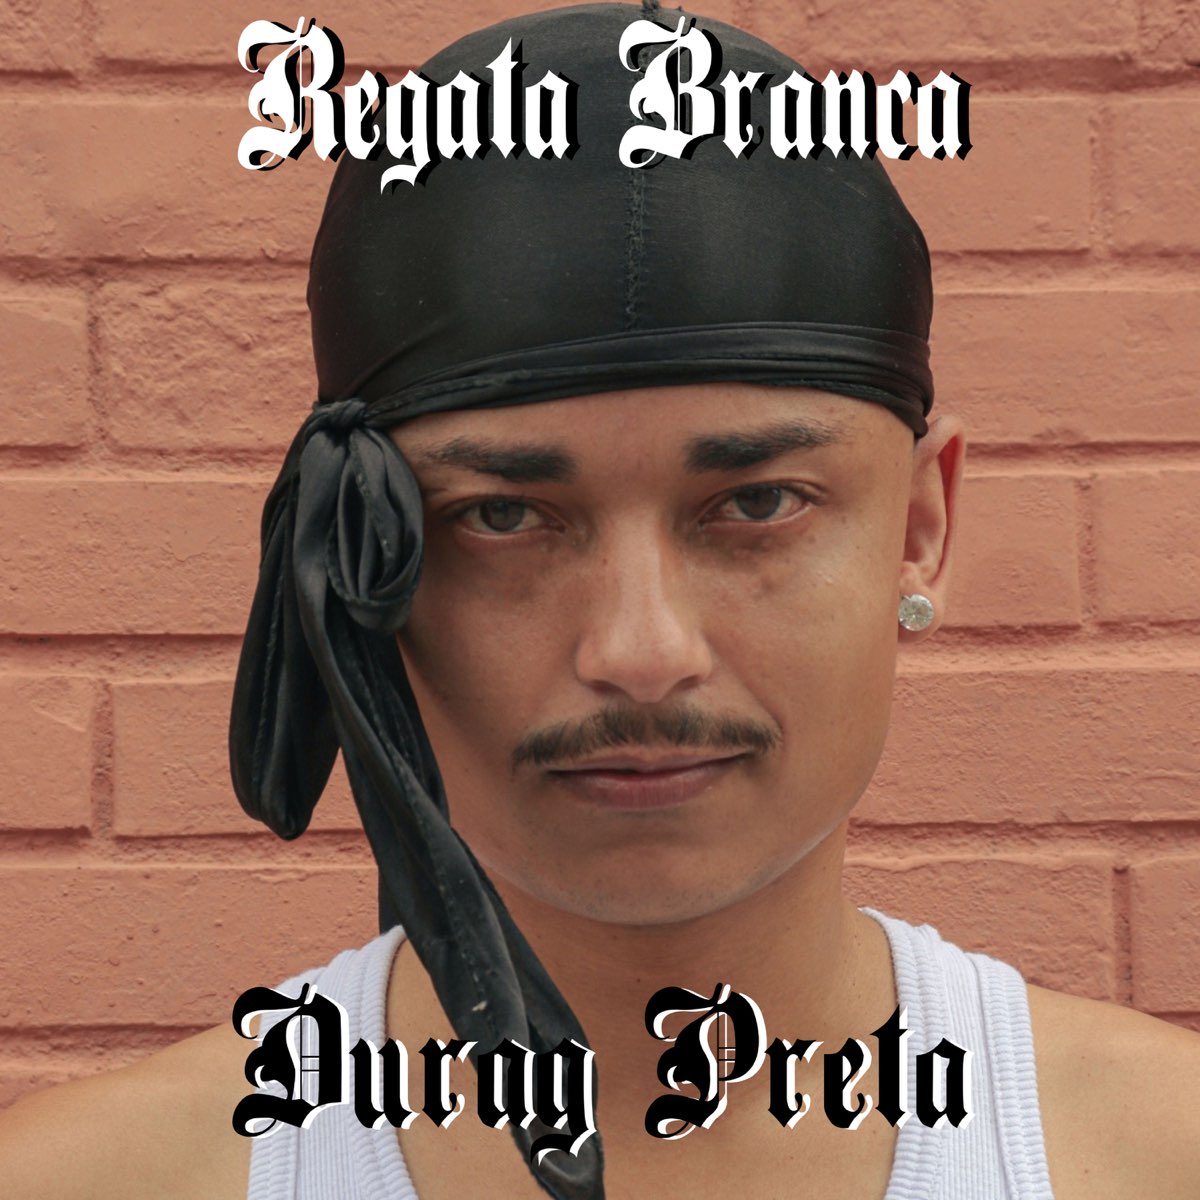 Regata Branca & Durag Preta - Single - Album by Dendê & Biel